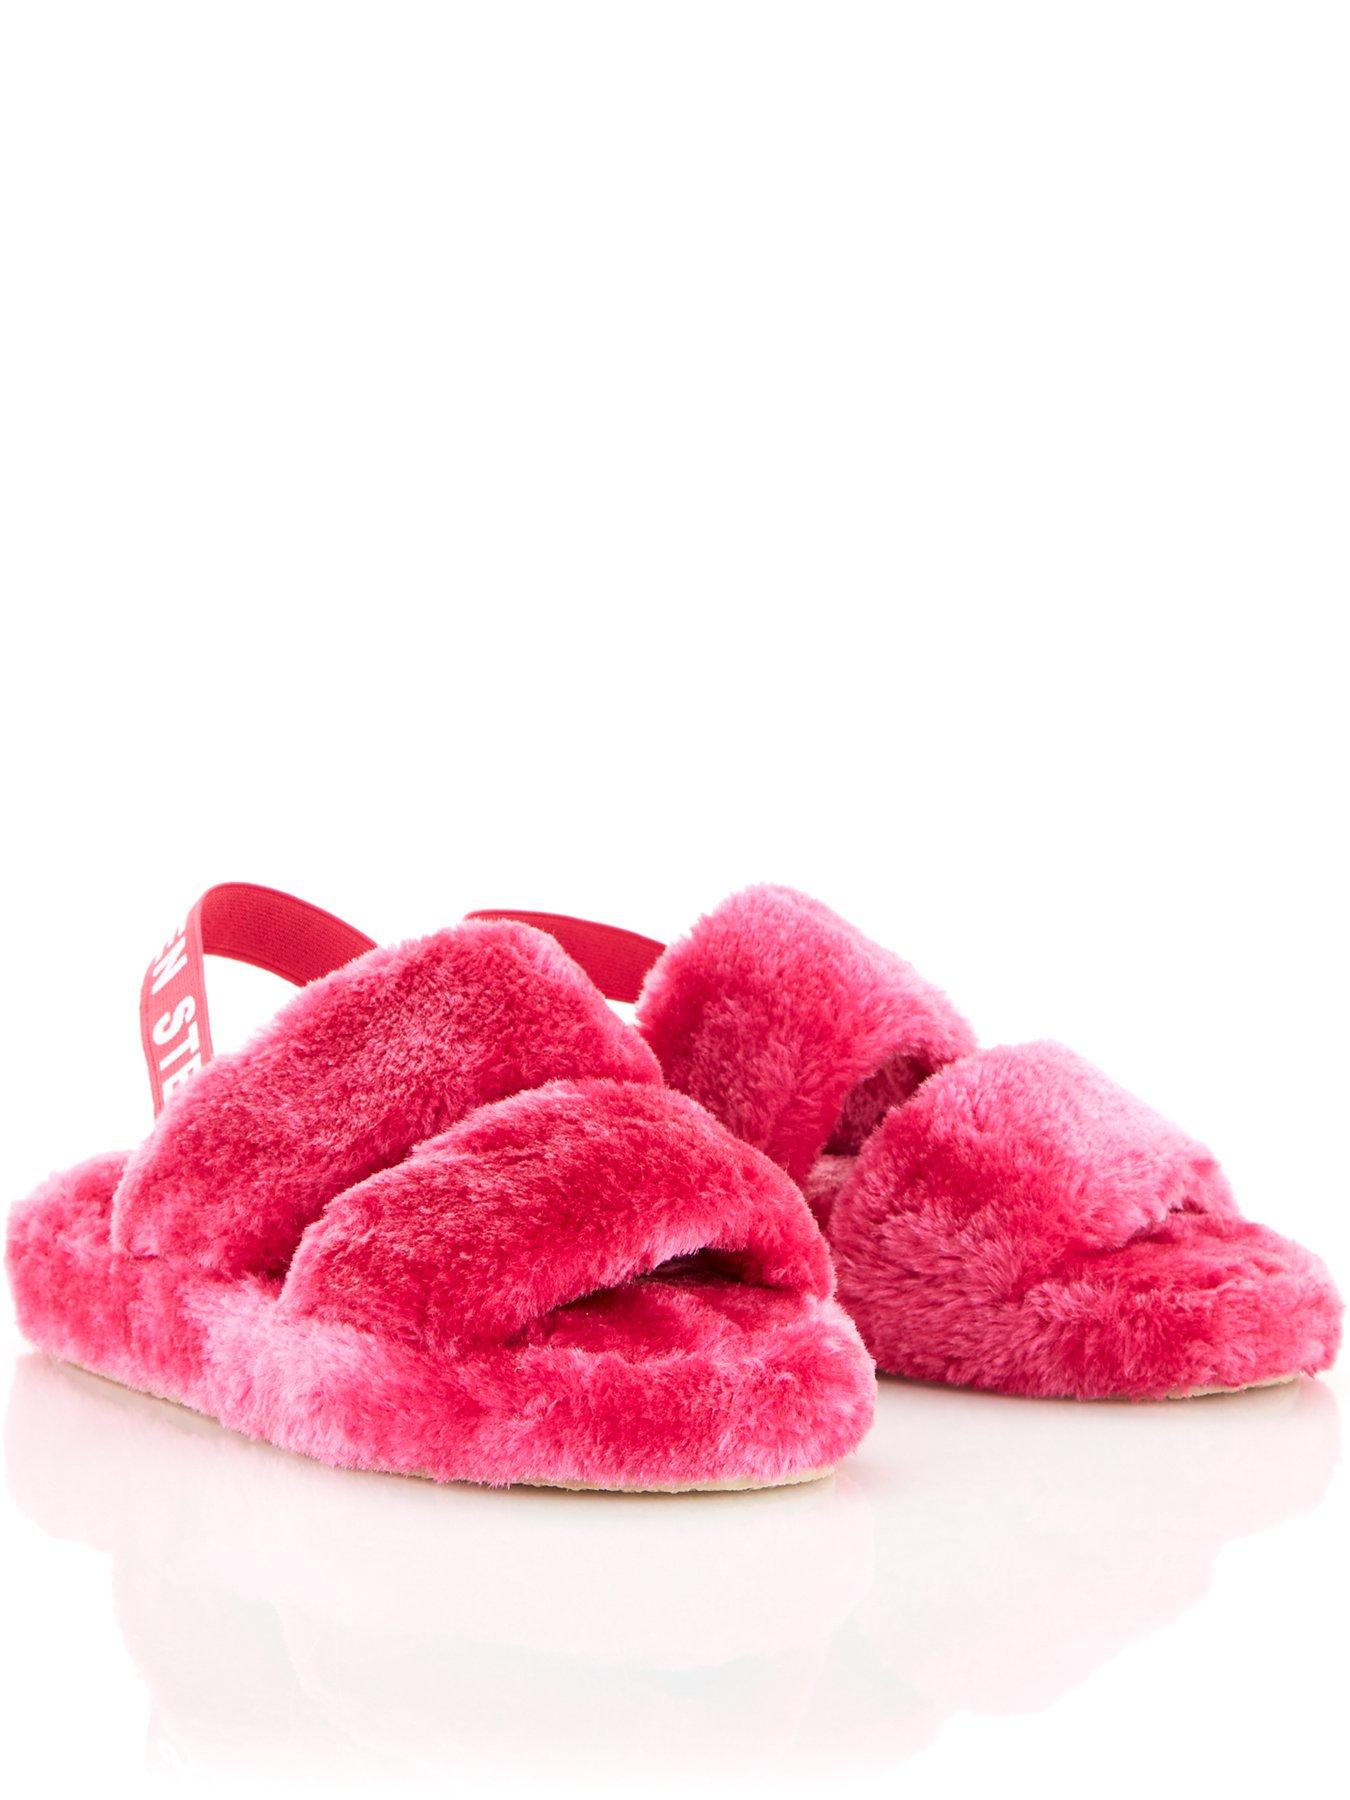 Shoes & boots Fluffy Mini Me Slipper Sandal - Hot Pink